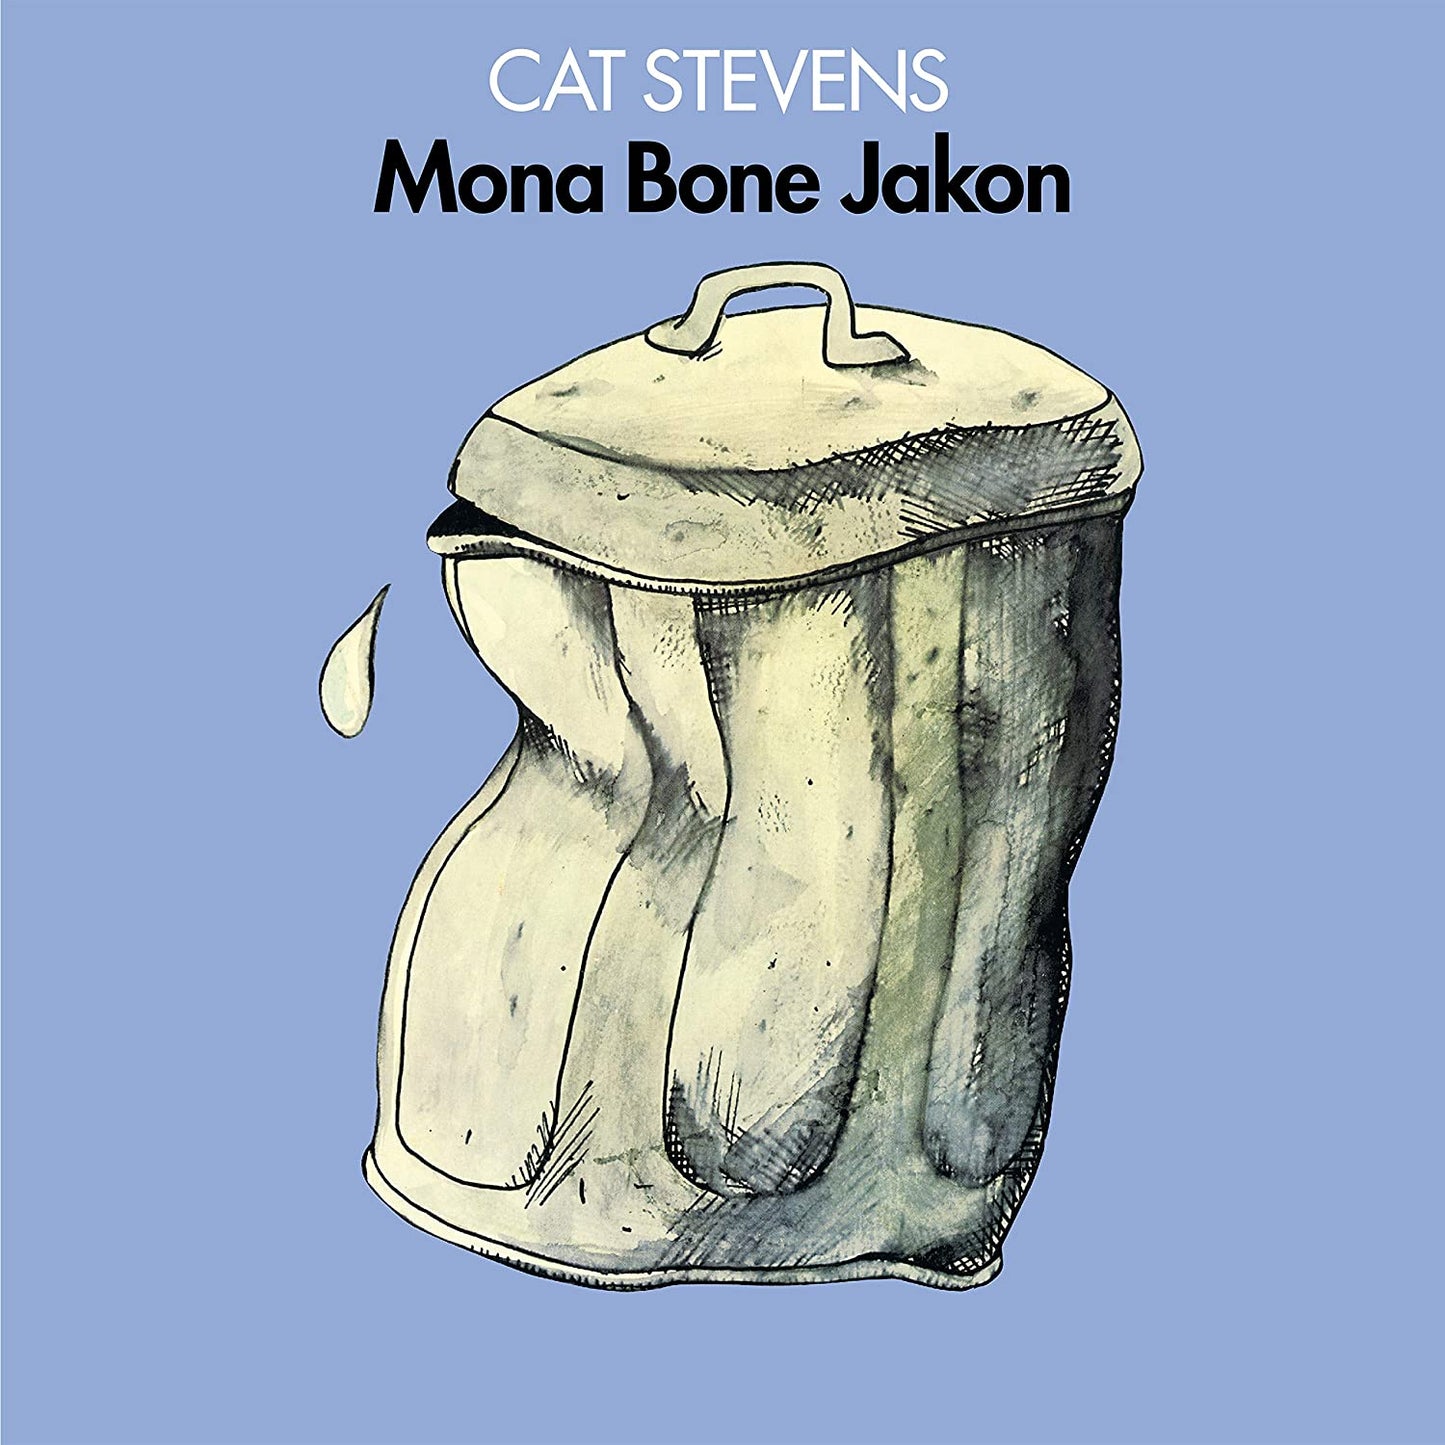 Yusuf / Cat Stevens - Mona Bone Jakon - LP